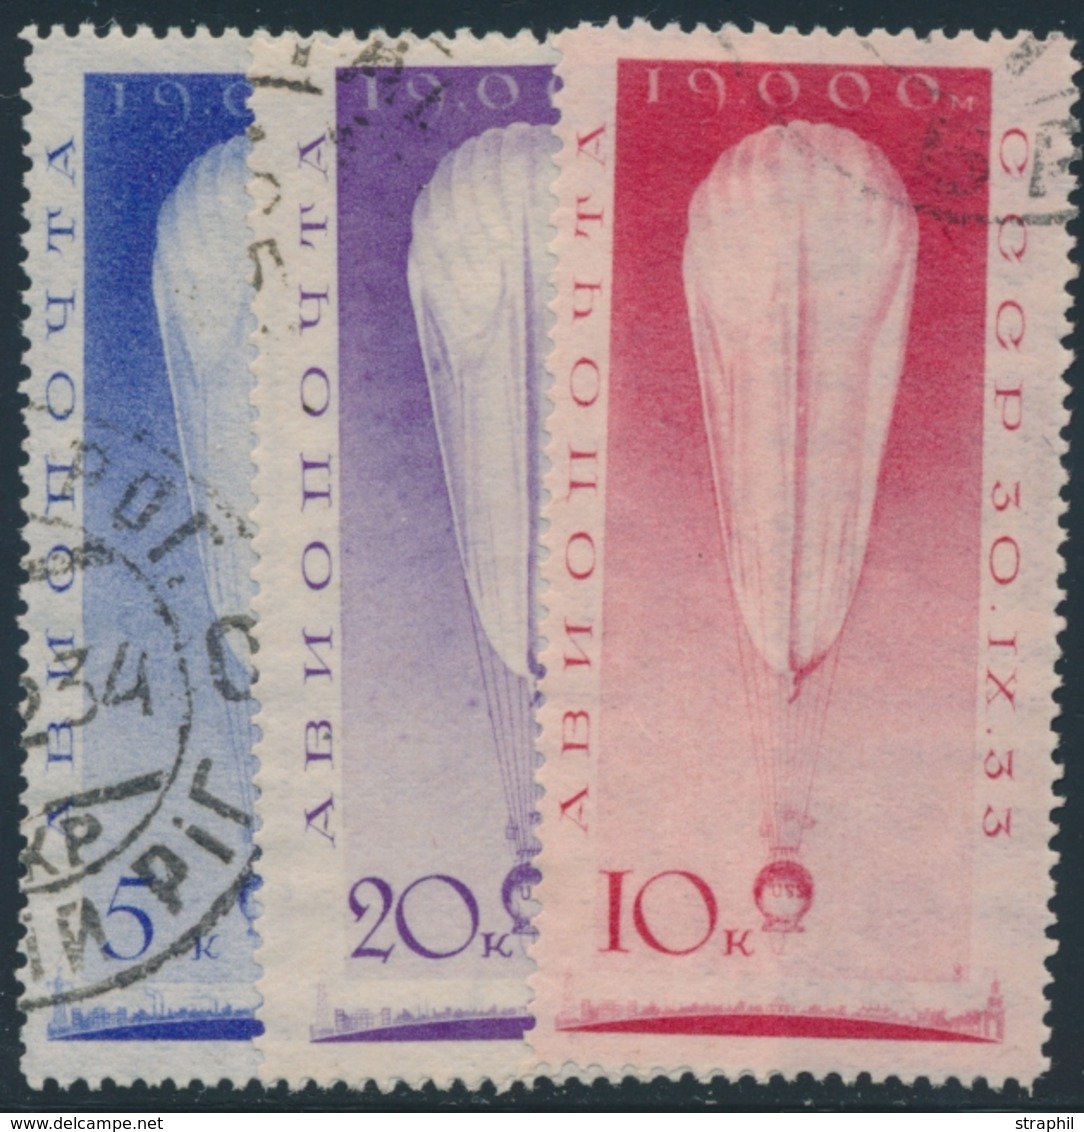 O RUSSIE - POSTE AERIENNE  - O - N°38/40 - TB - Unused Stamps